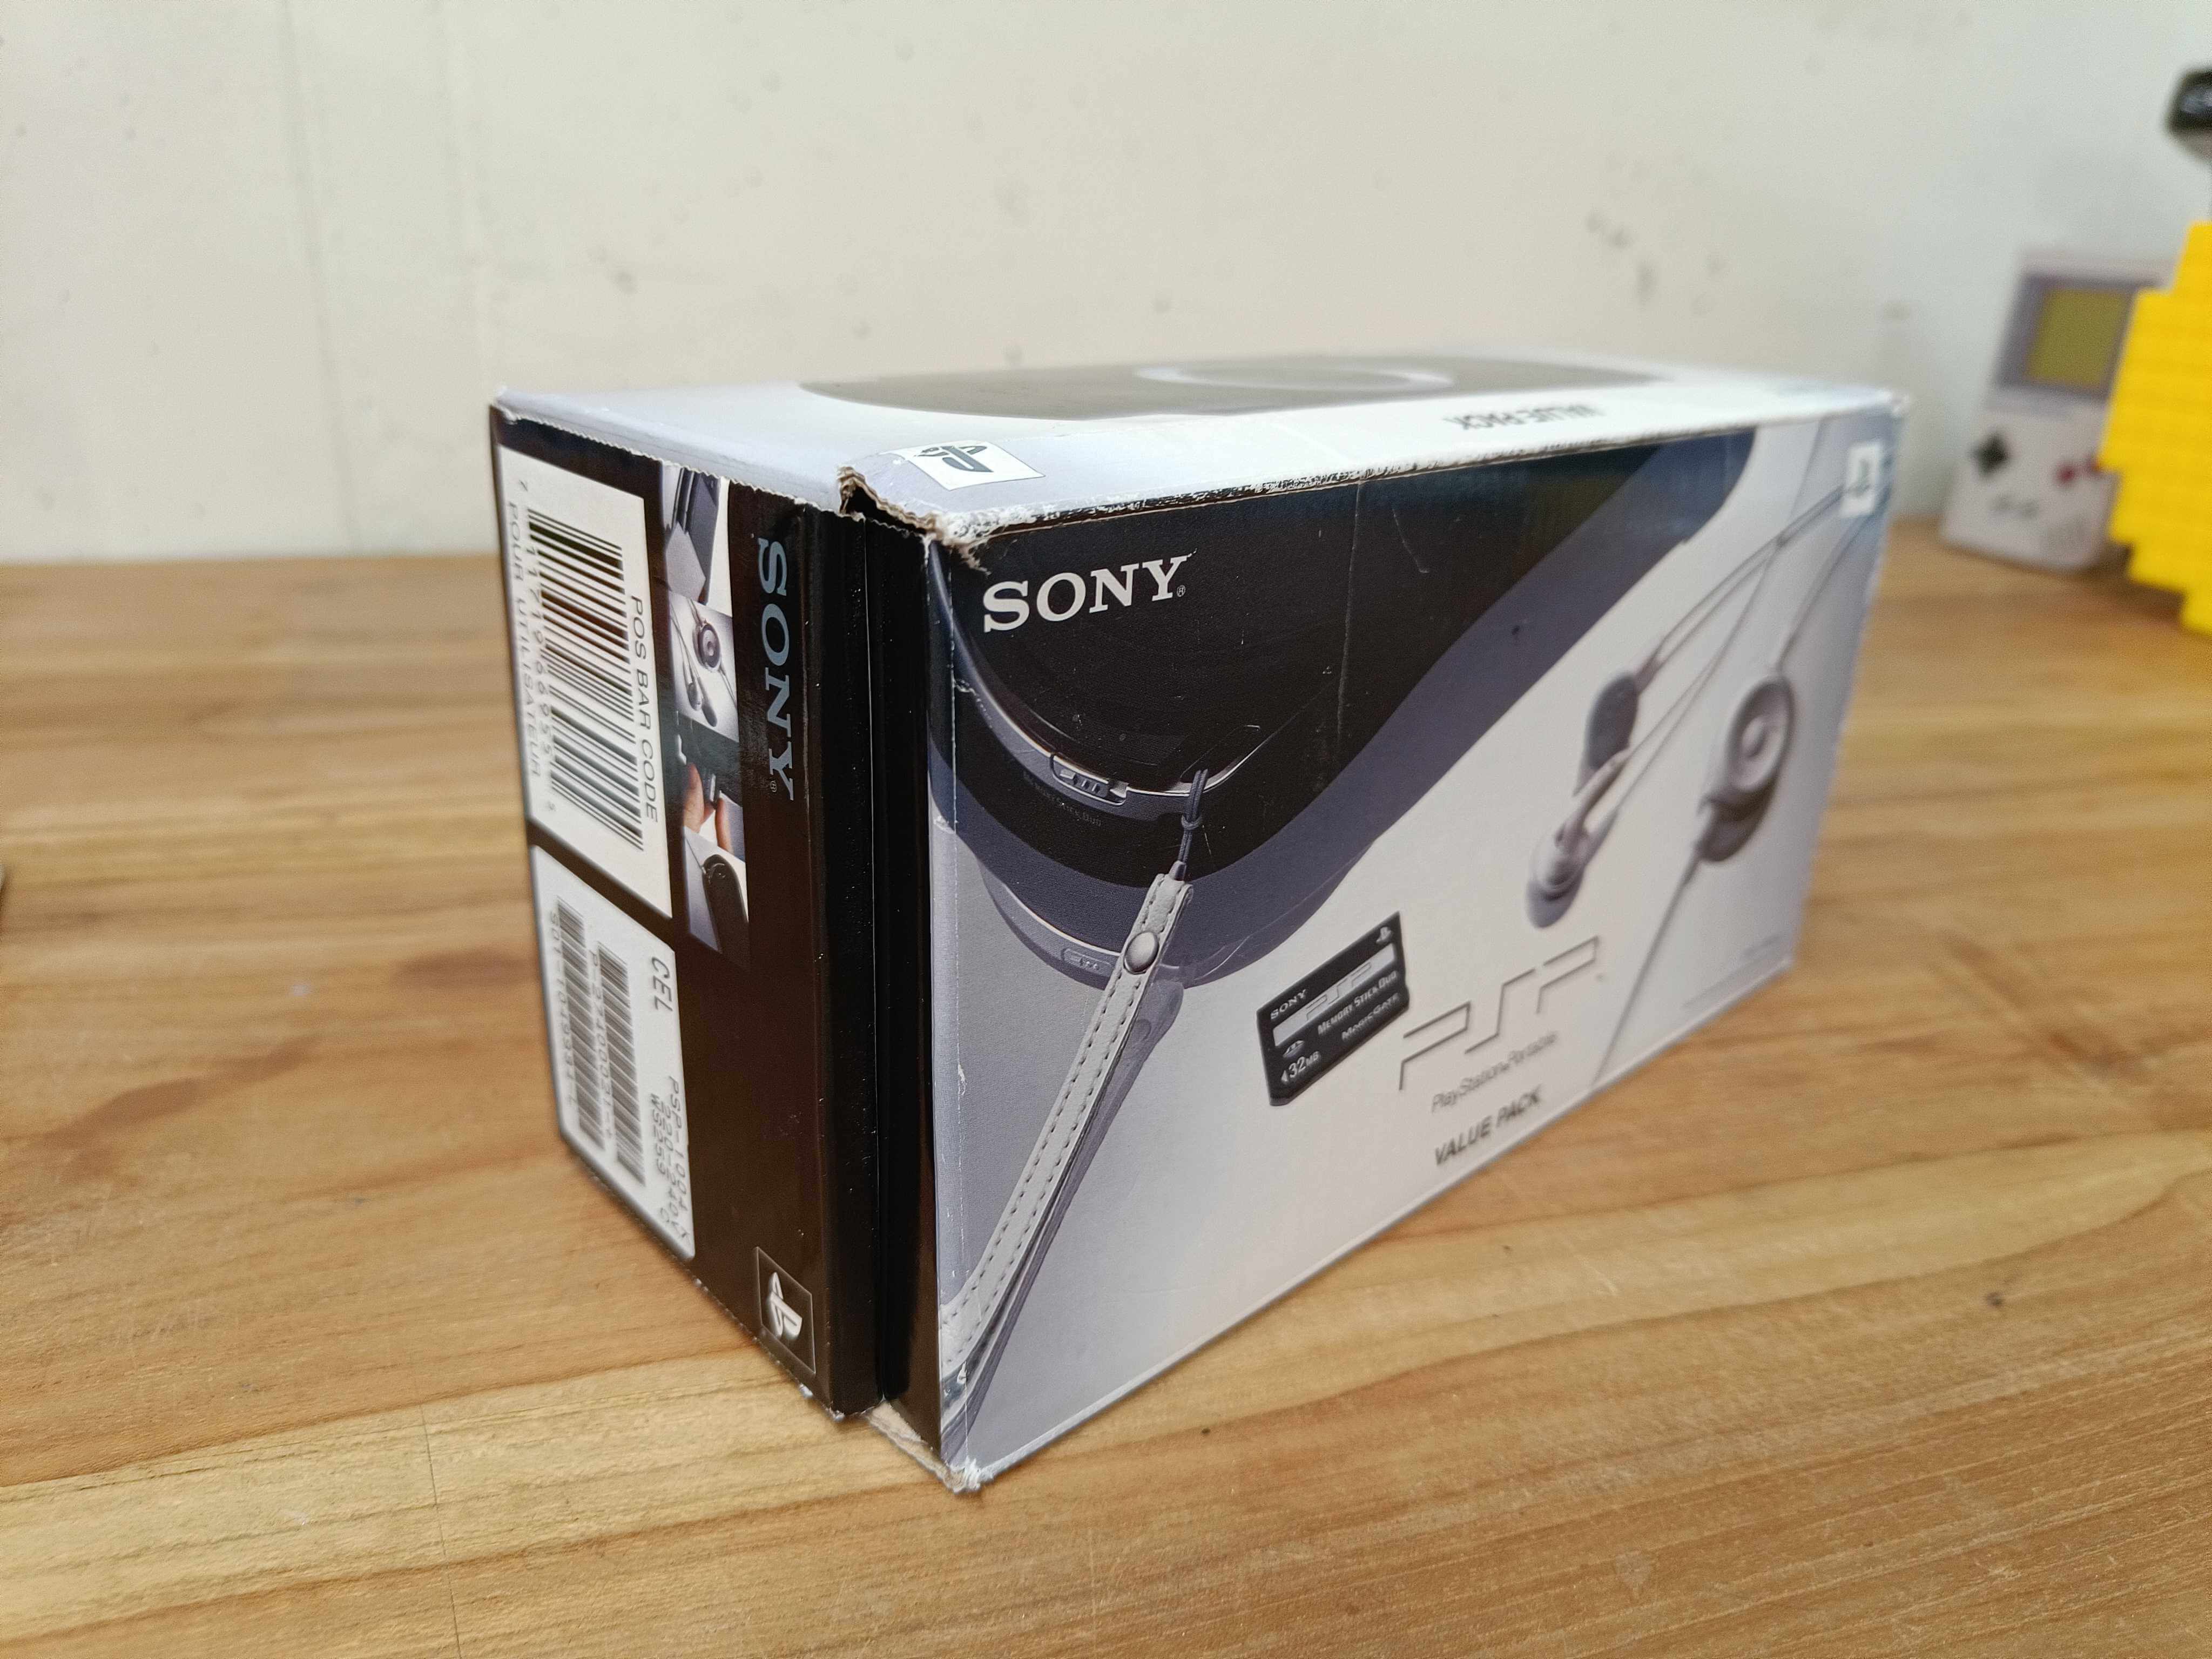 Playstation Portable PSP 1000 - Value Pack - Playstation Portable Hardware - 2